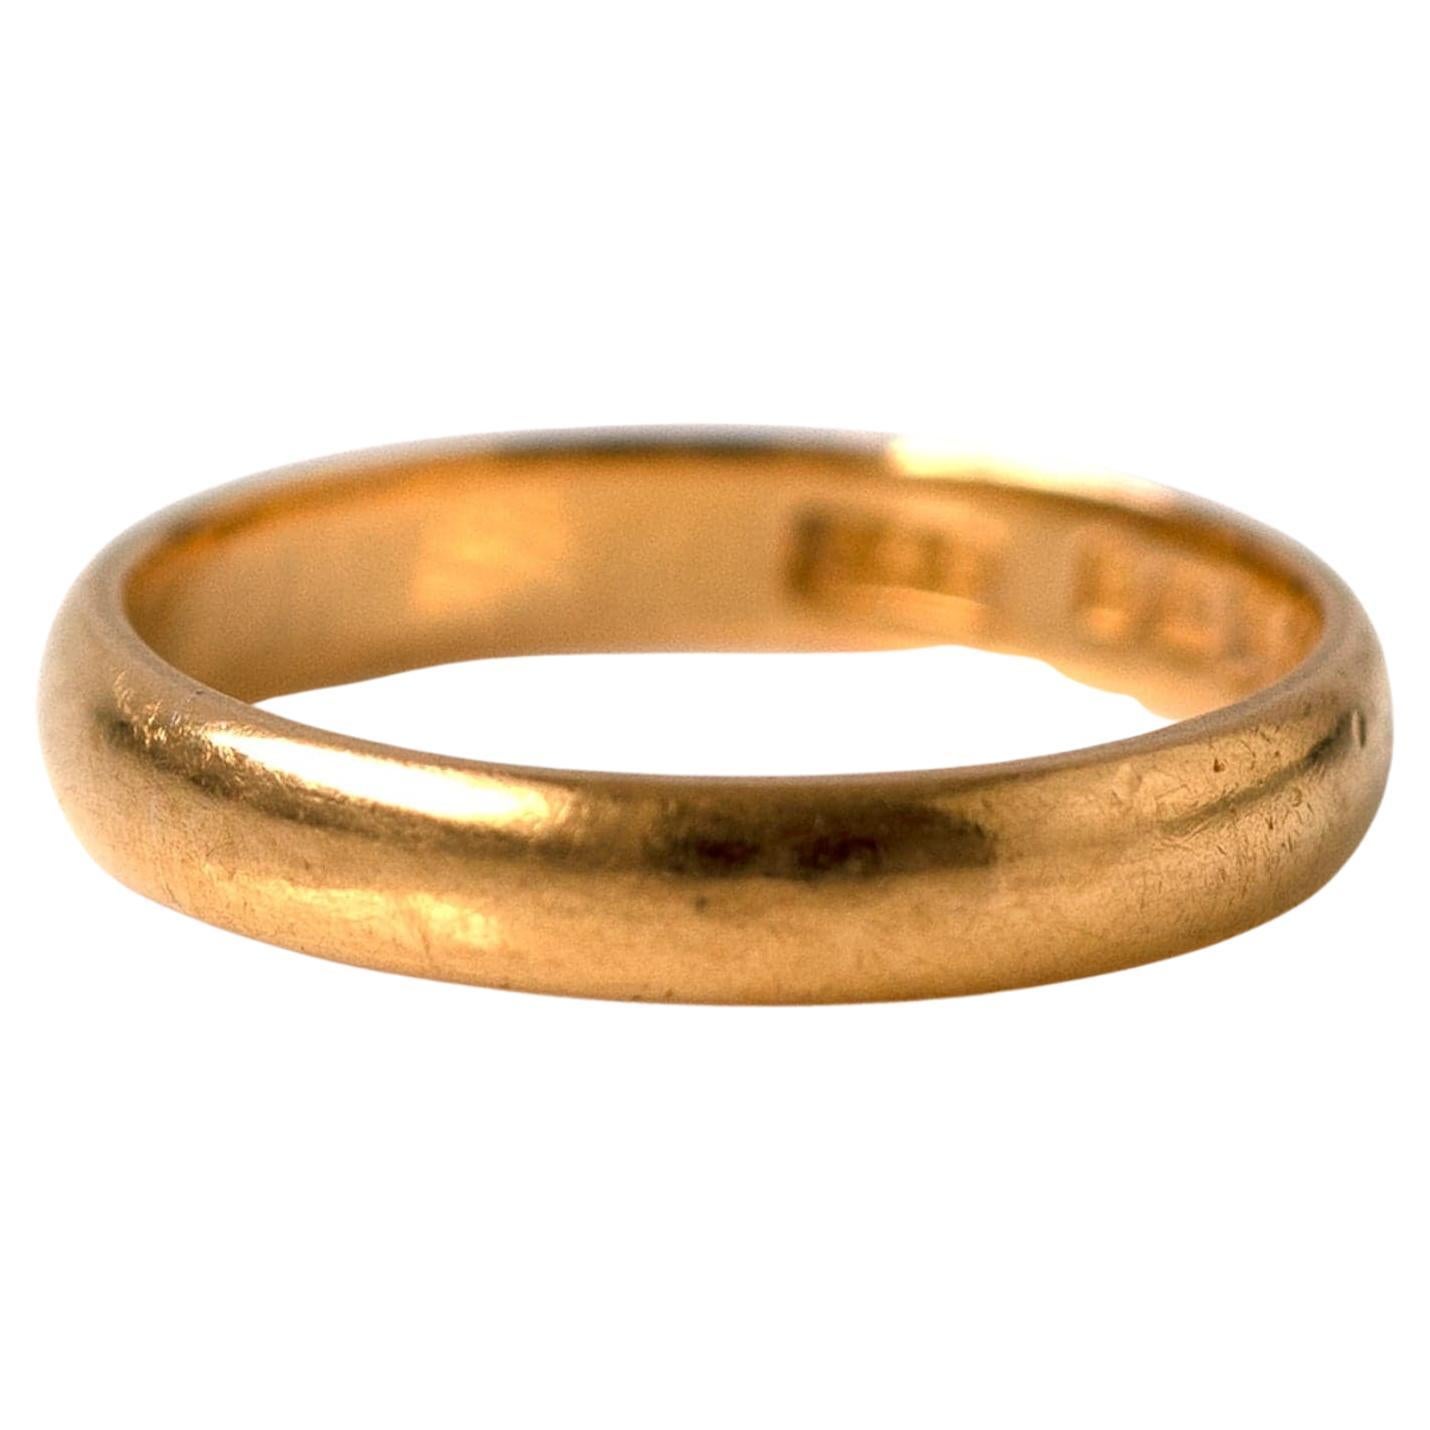 Vintage 1951 22ct Gold Wedding Band Ring